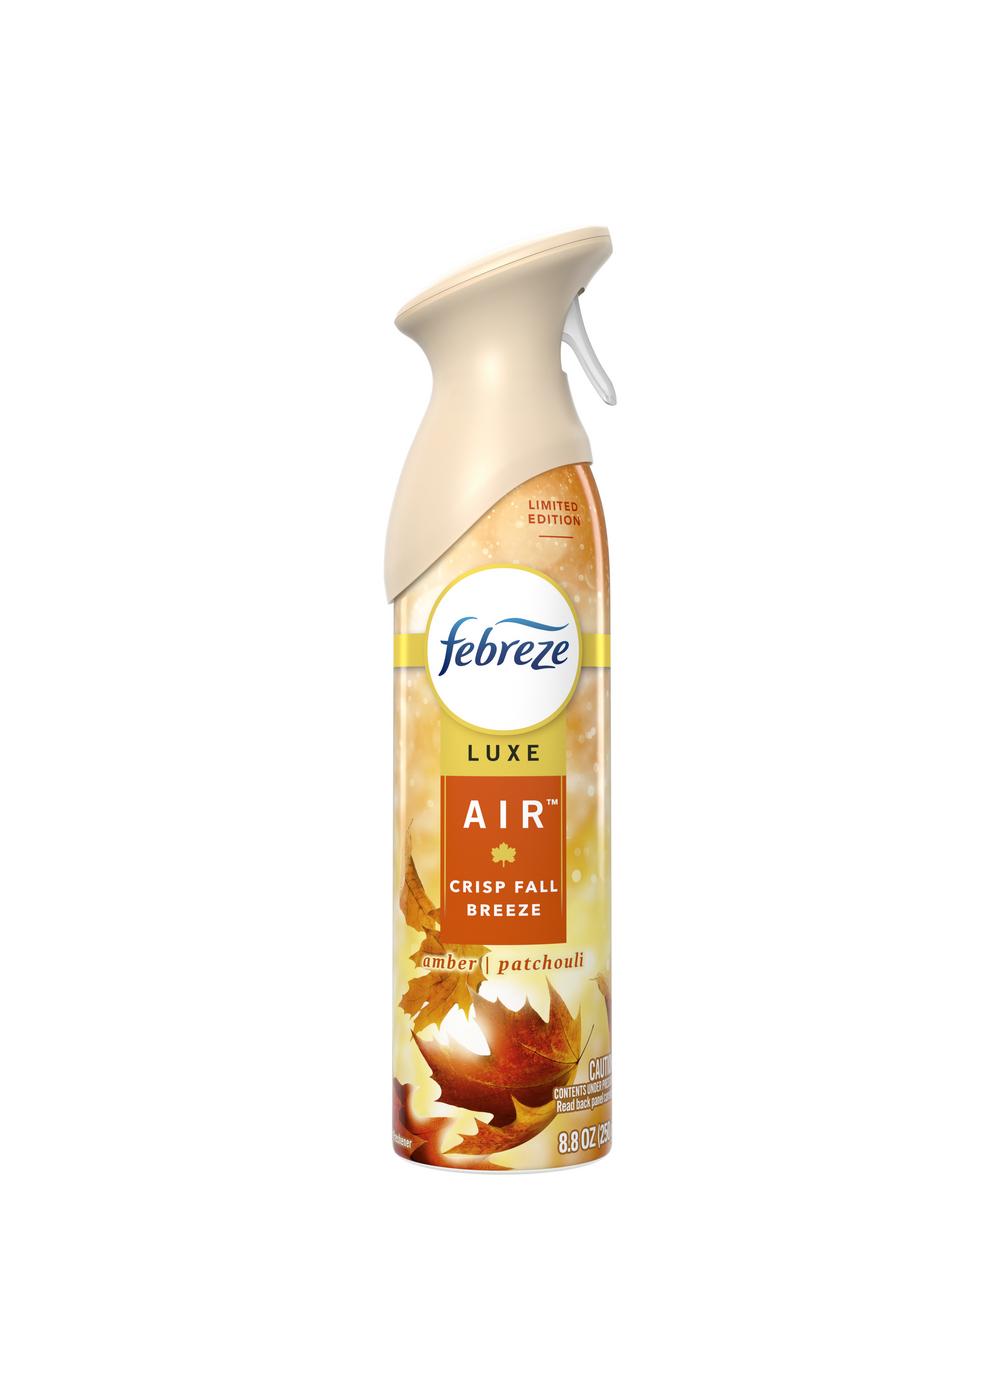 Febreze Air Mist Odor-Fighting Aerosol Air Freshener Can - Crisp Fall Breeze; image 1 of 2